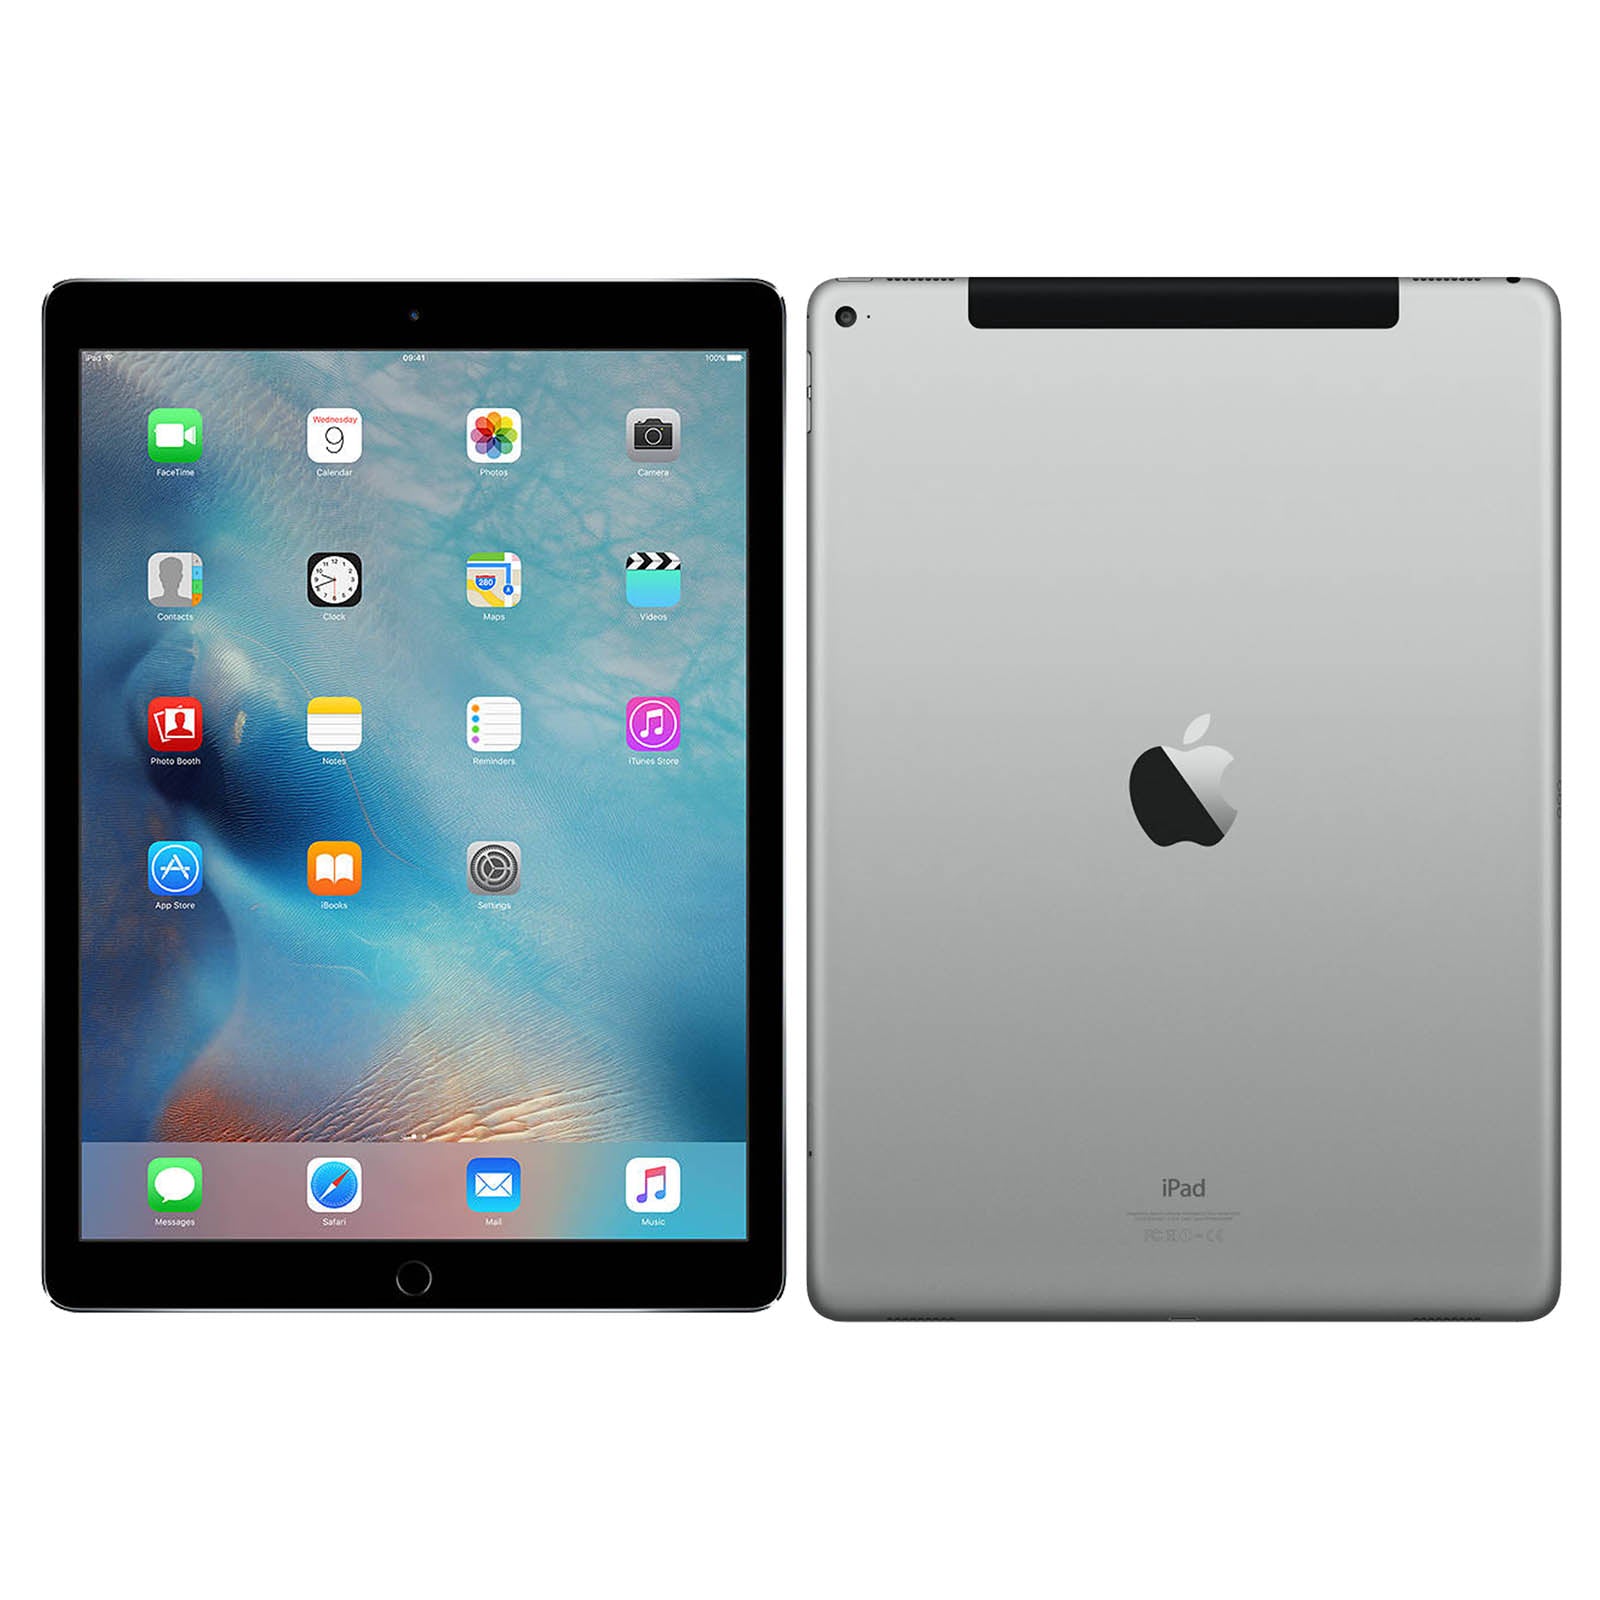 iPad Pro 12.9 Inch 2nd Gen 256GB Space Grey Pristine - WiFi